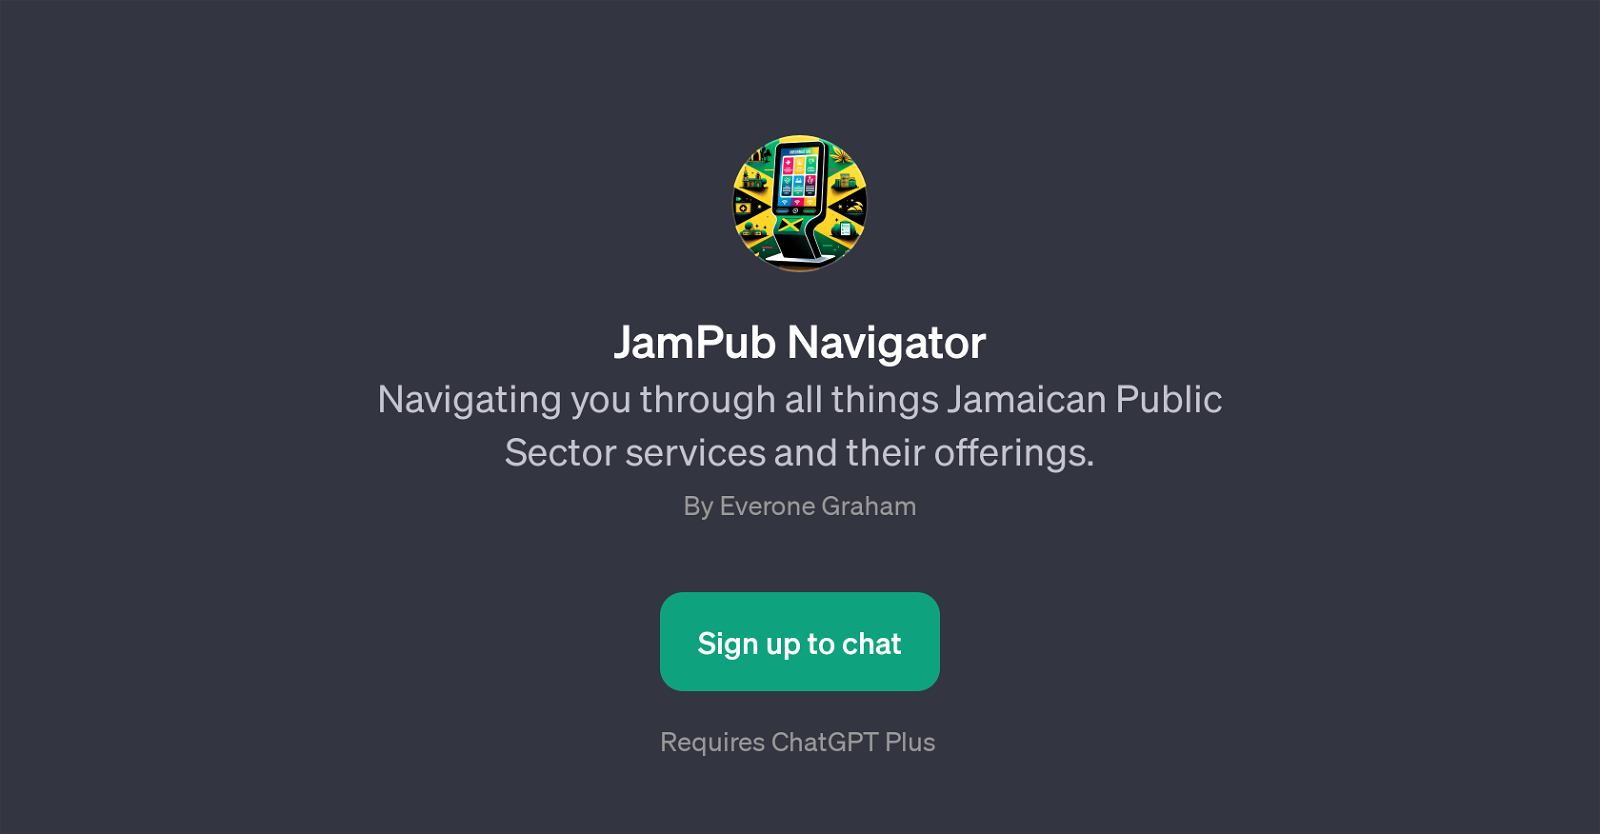 JamPub Navigator website